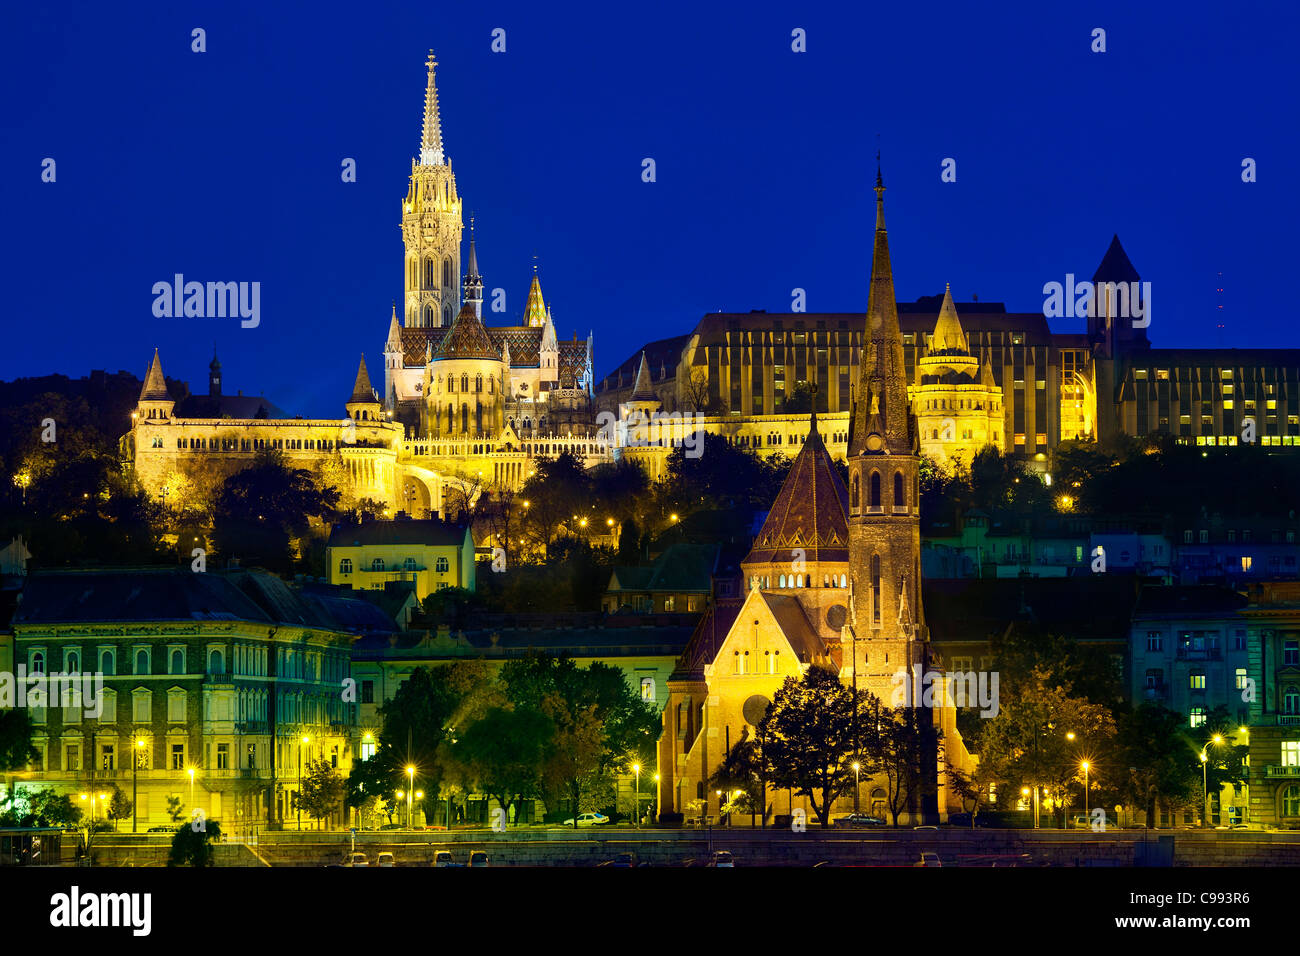 Europe, Europe central, Hungary, Budapest, Matthias Church and Calvinist Church at Night Stock Photo